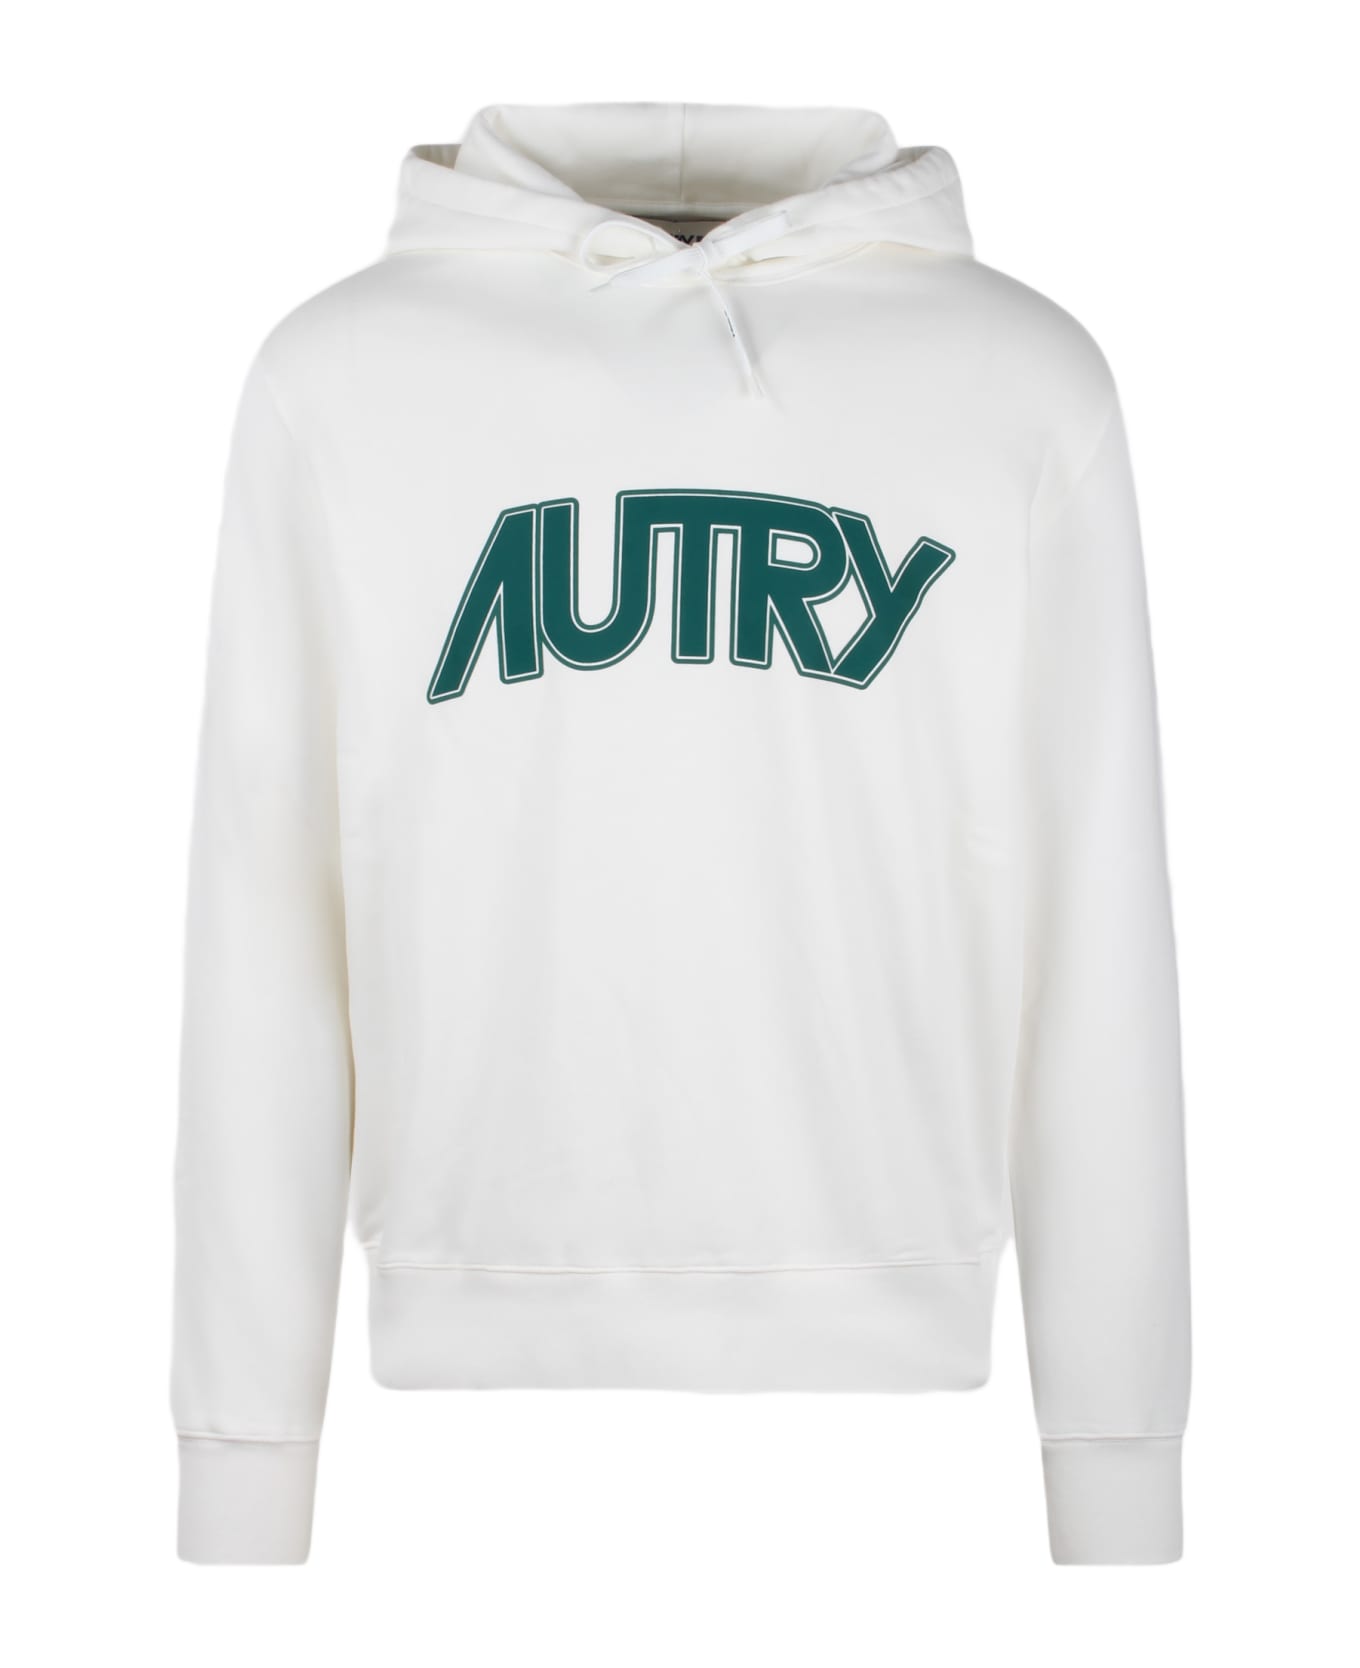 Autry Cotton Hooded Sweatshirt - White